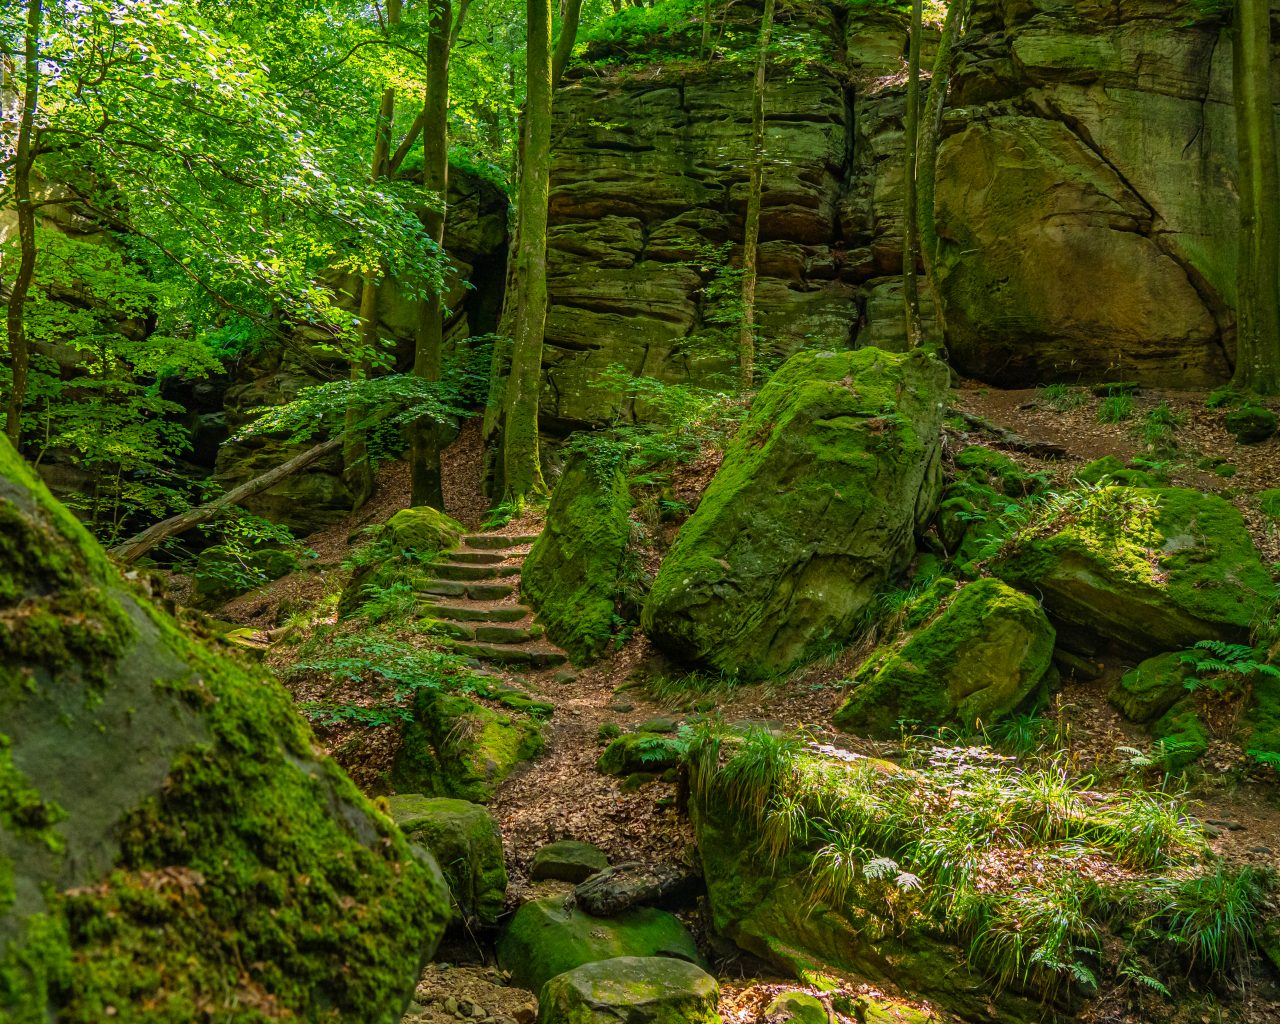 Wandelpad-loopt-door-groene-natuur-met-grote-rotsen